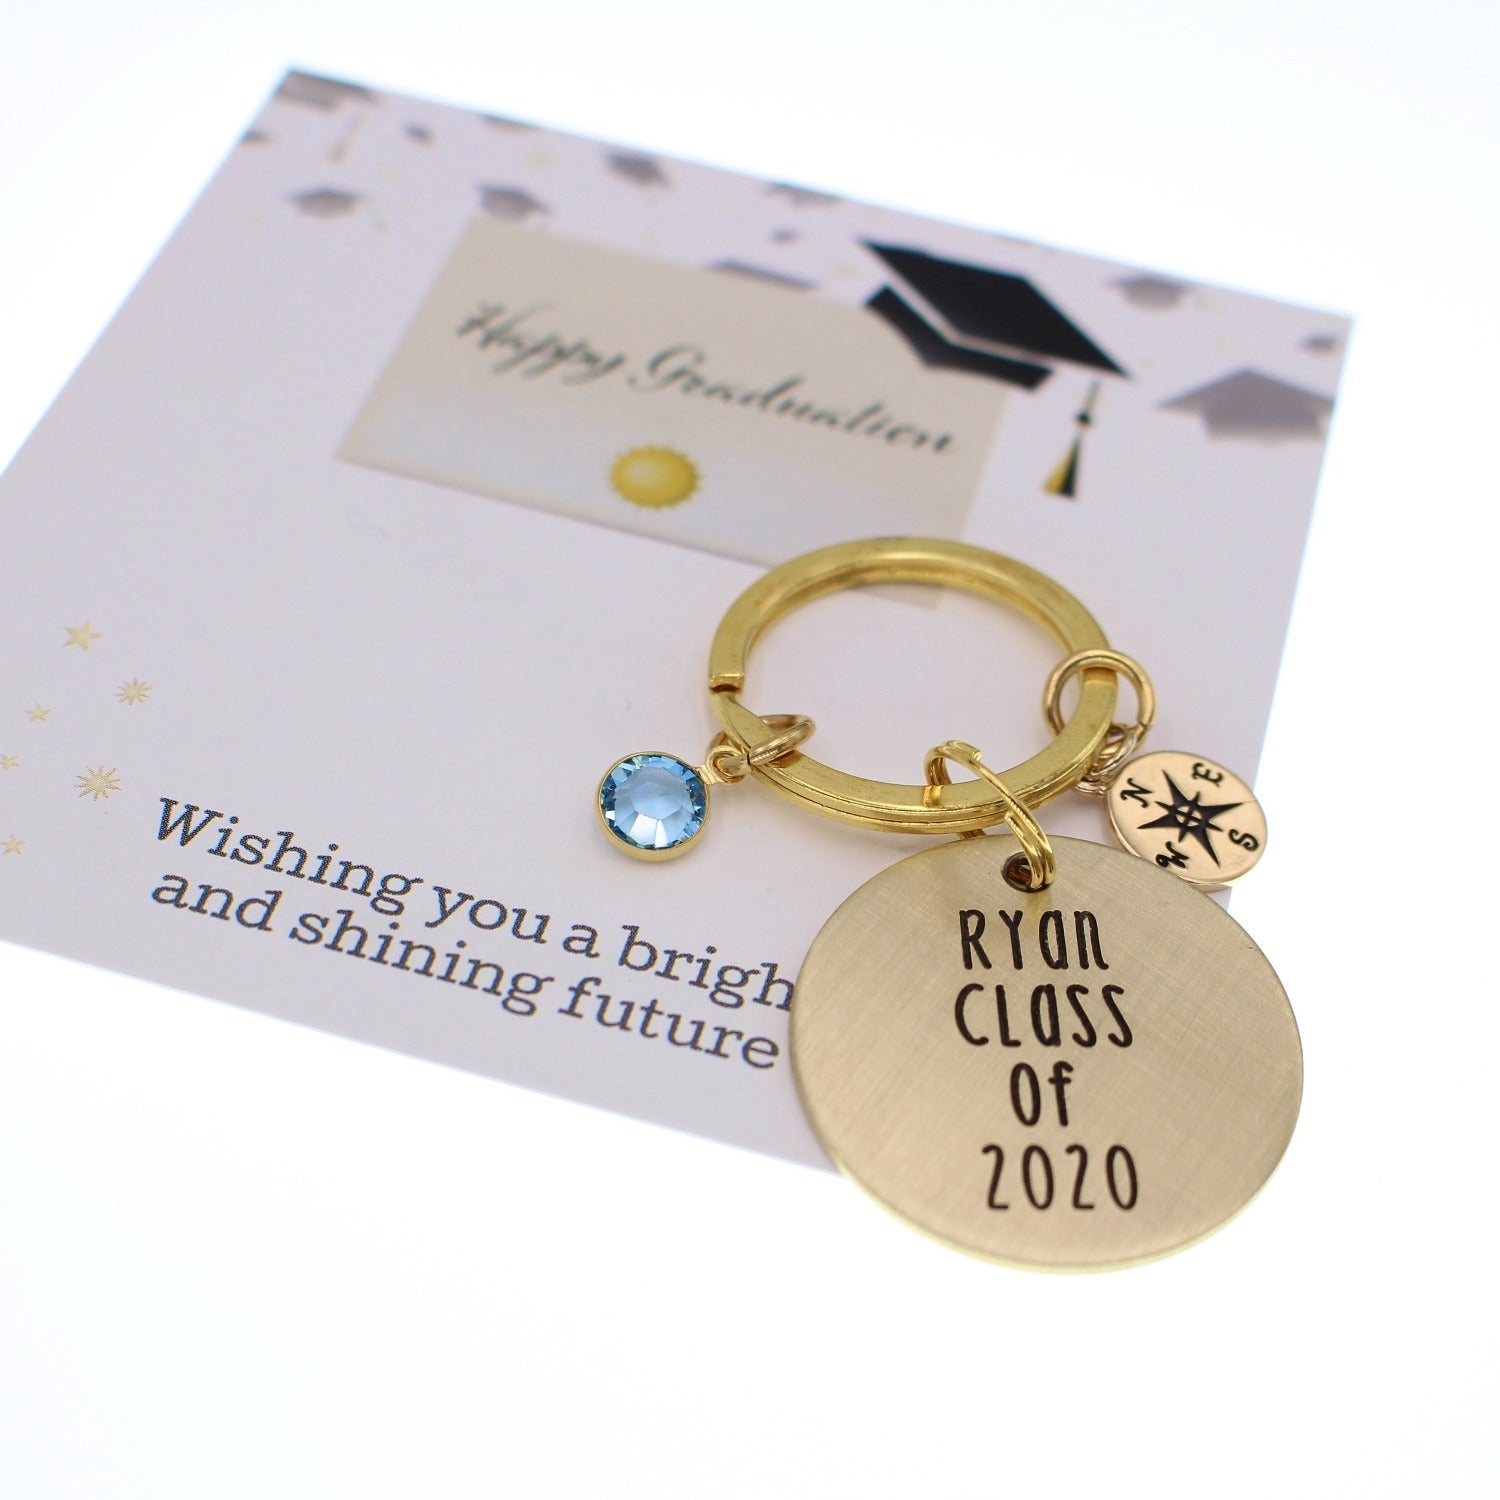 Graduation Compass Keychain - Love It Personalized